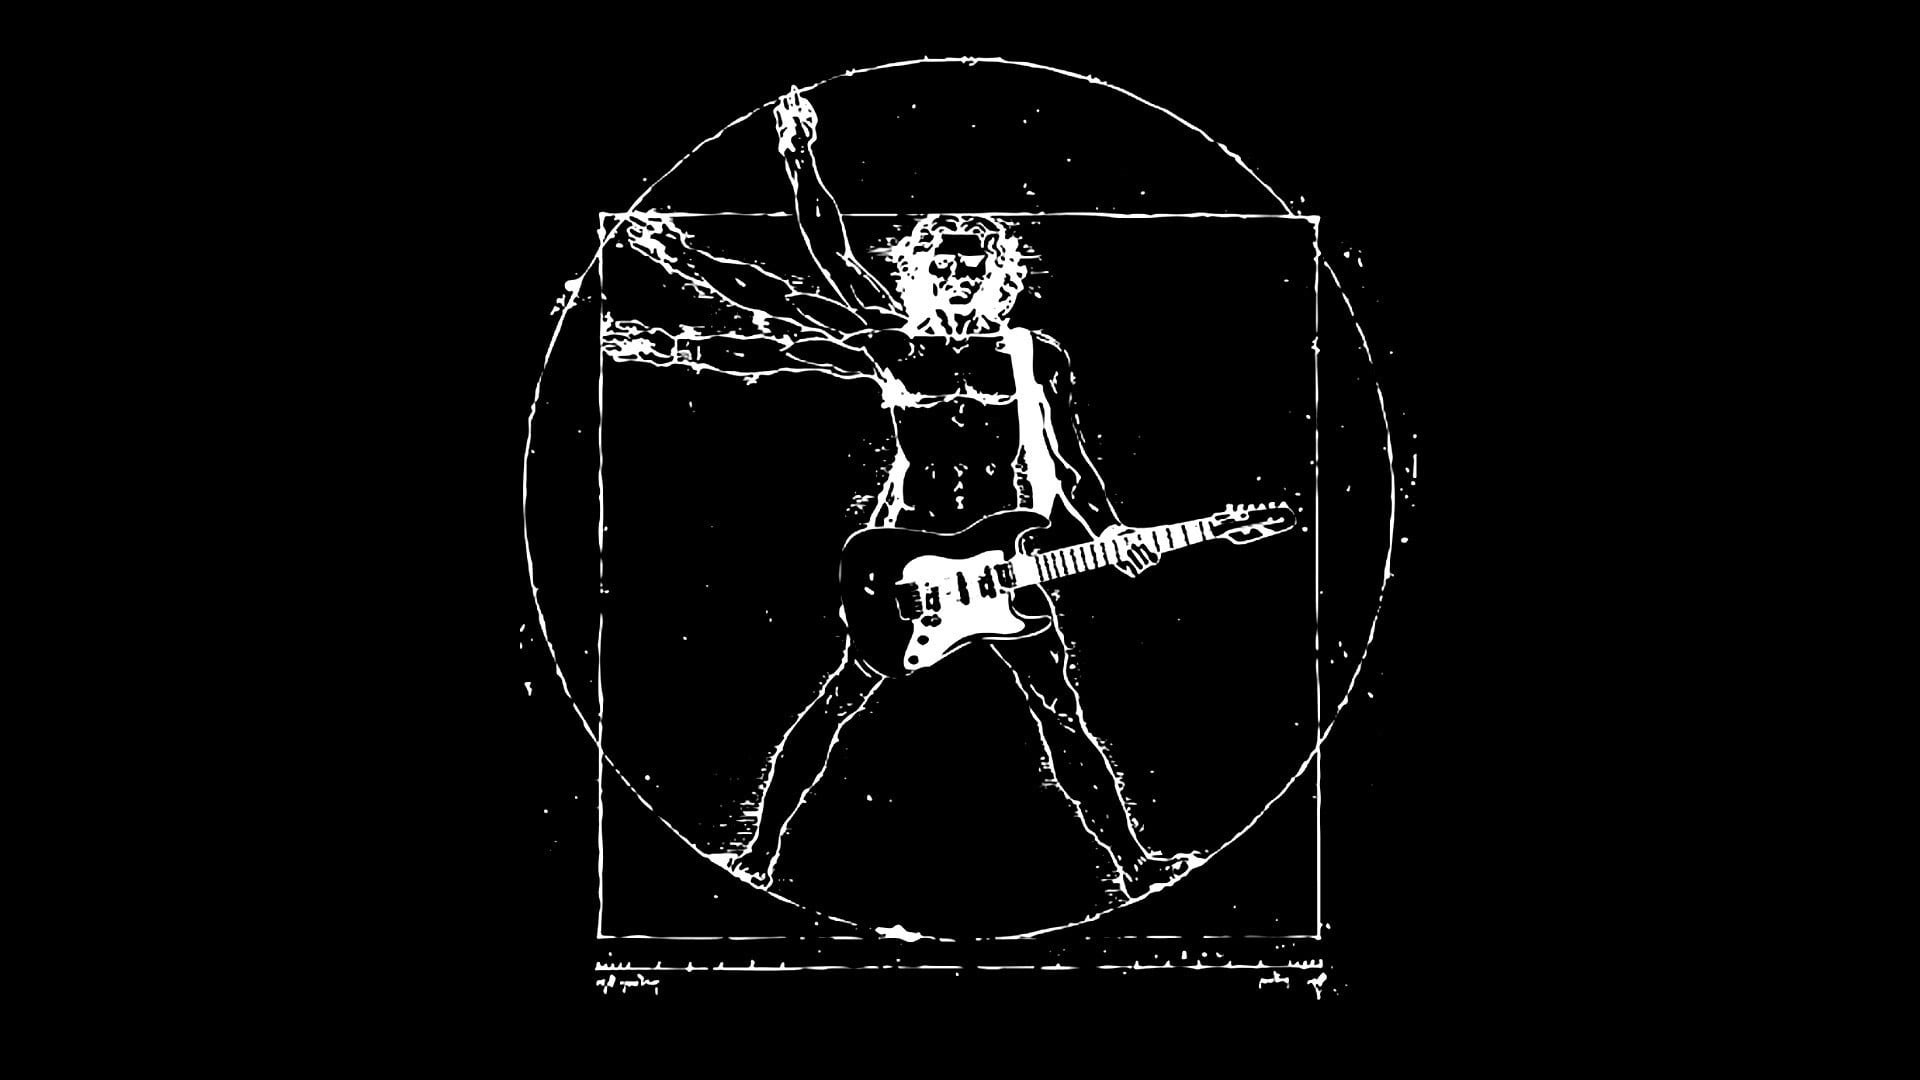 Wallpaper vitruvian man guitar rock music rock music